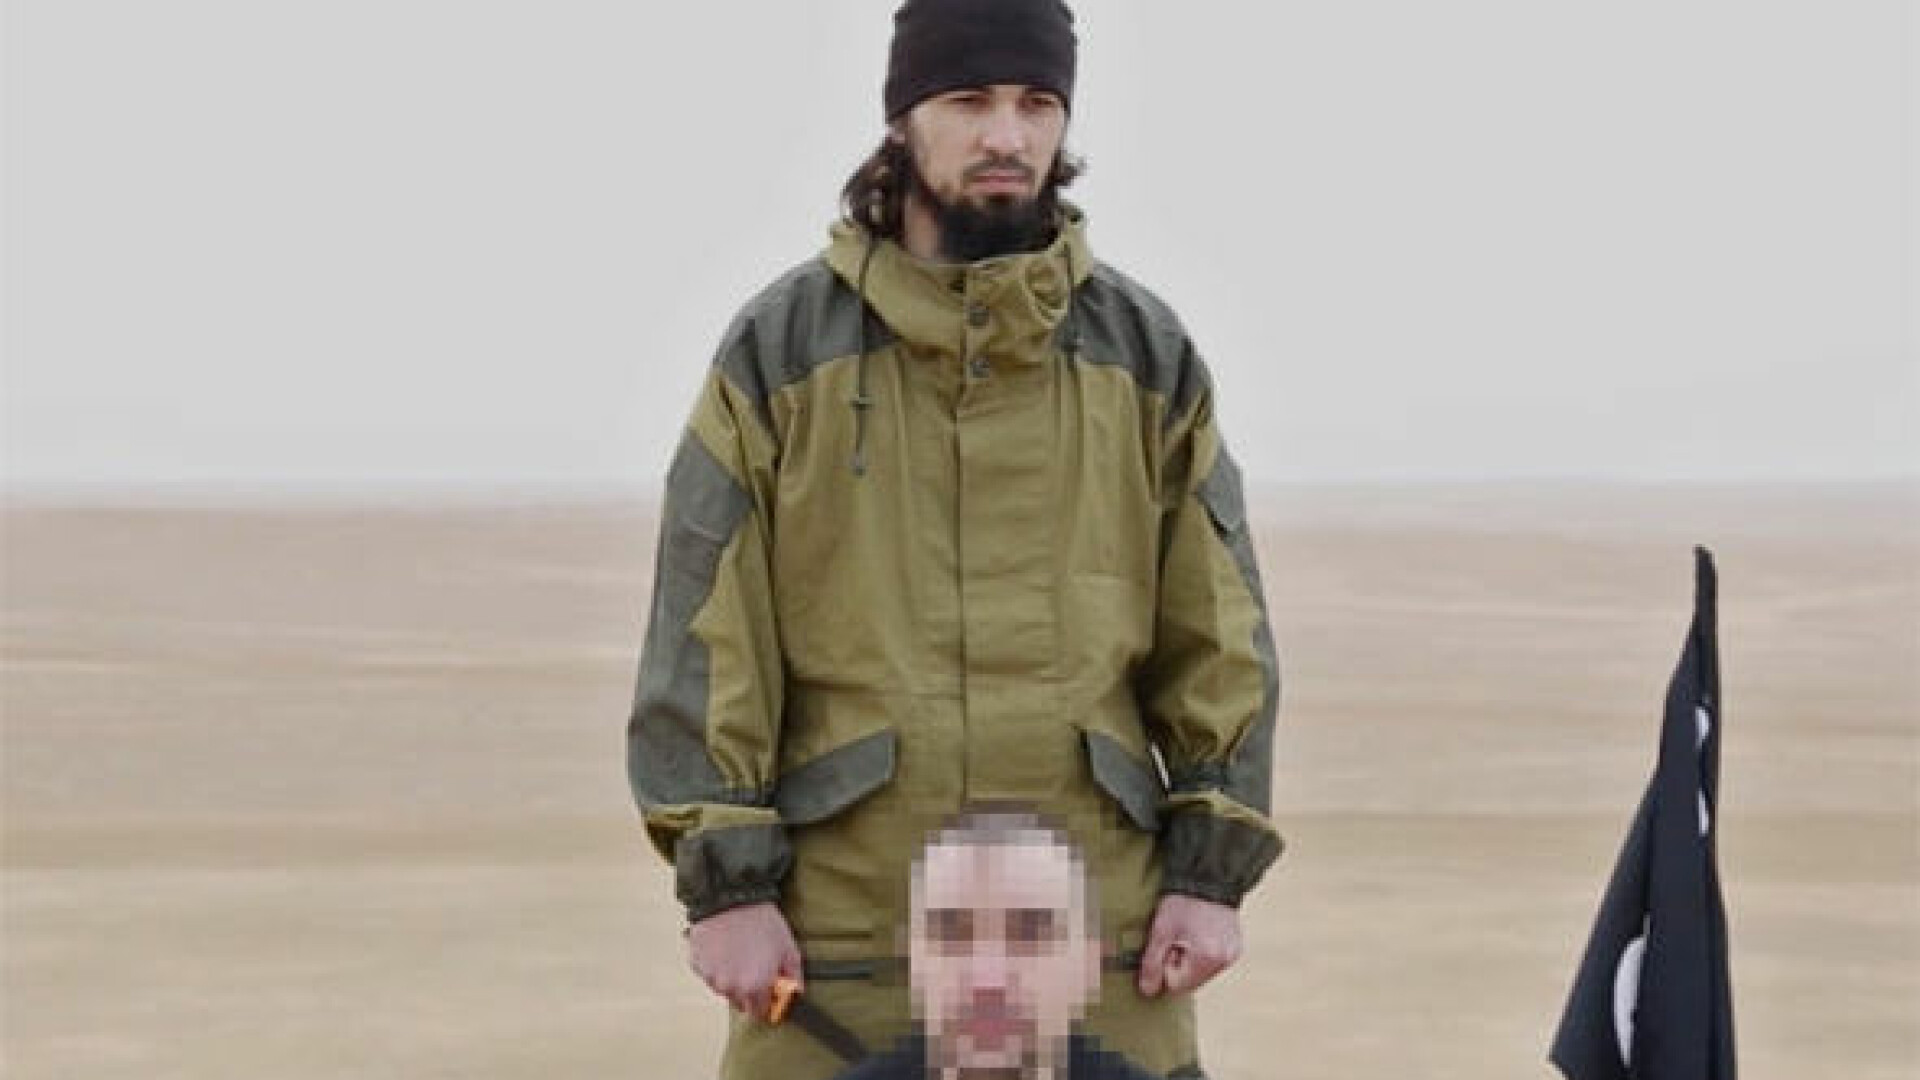 Decapitare ISIS